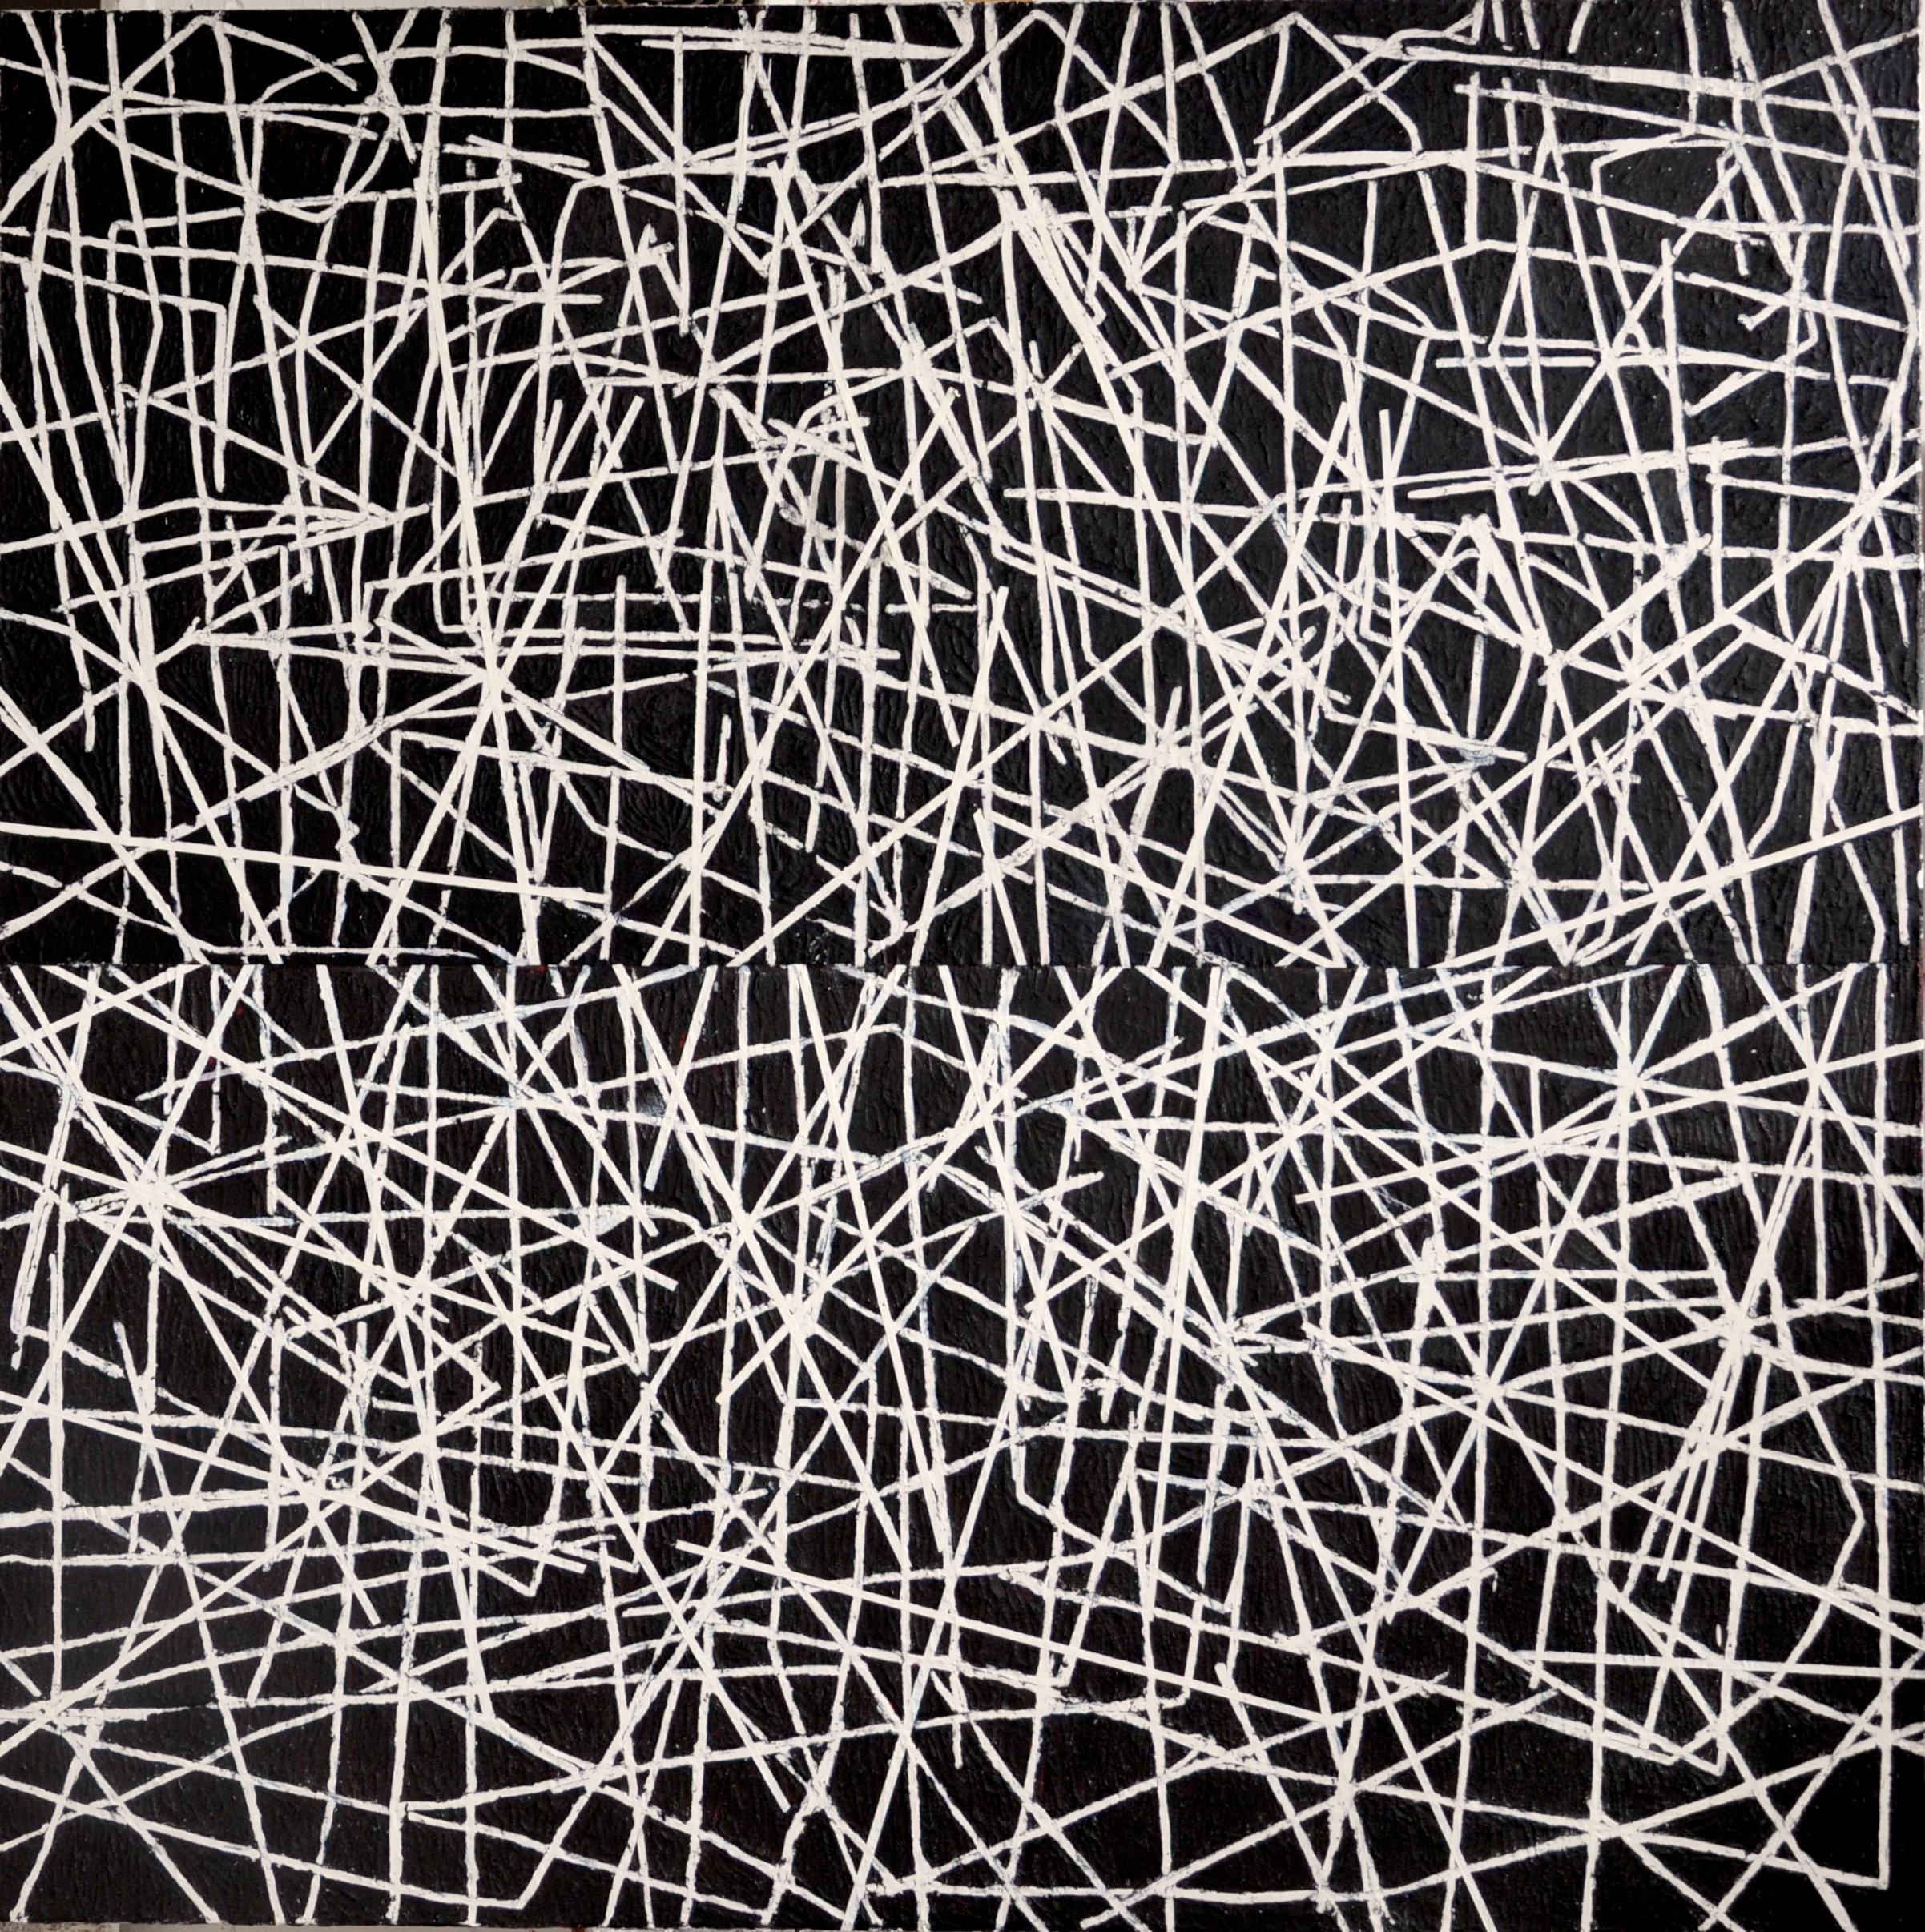 Network - Conceptual Encaustic, Marble Dust, Oil Pigments Painting On Canvas 